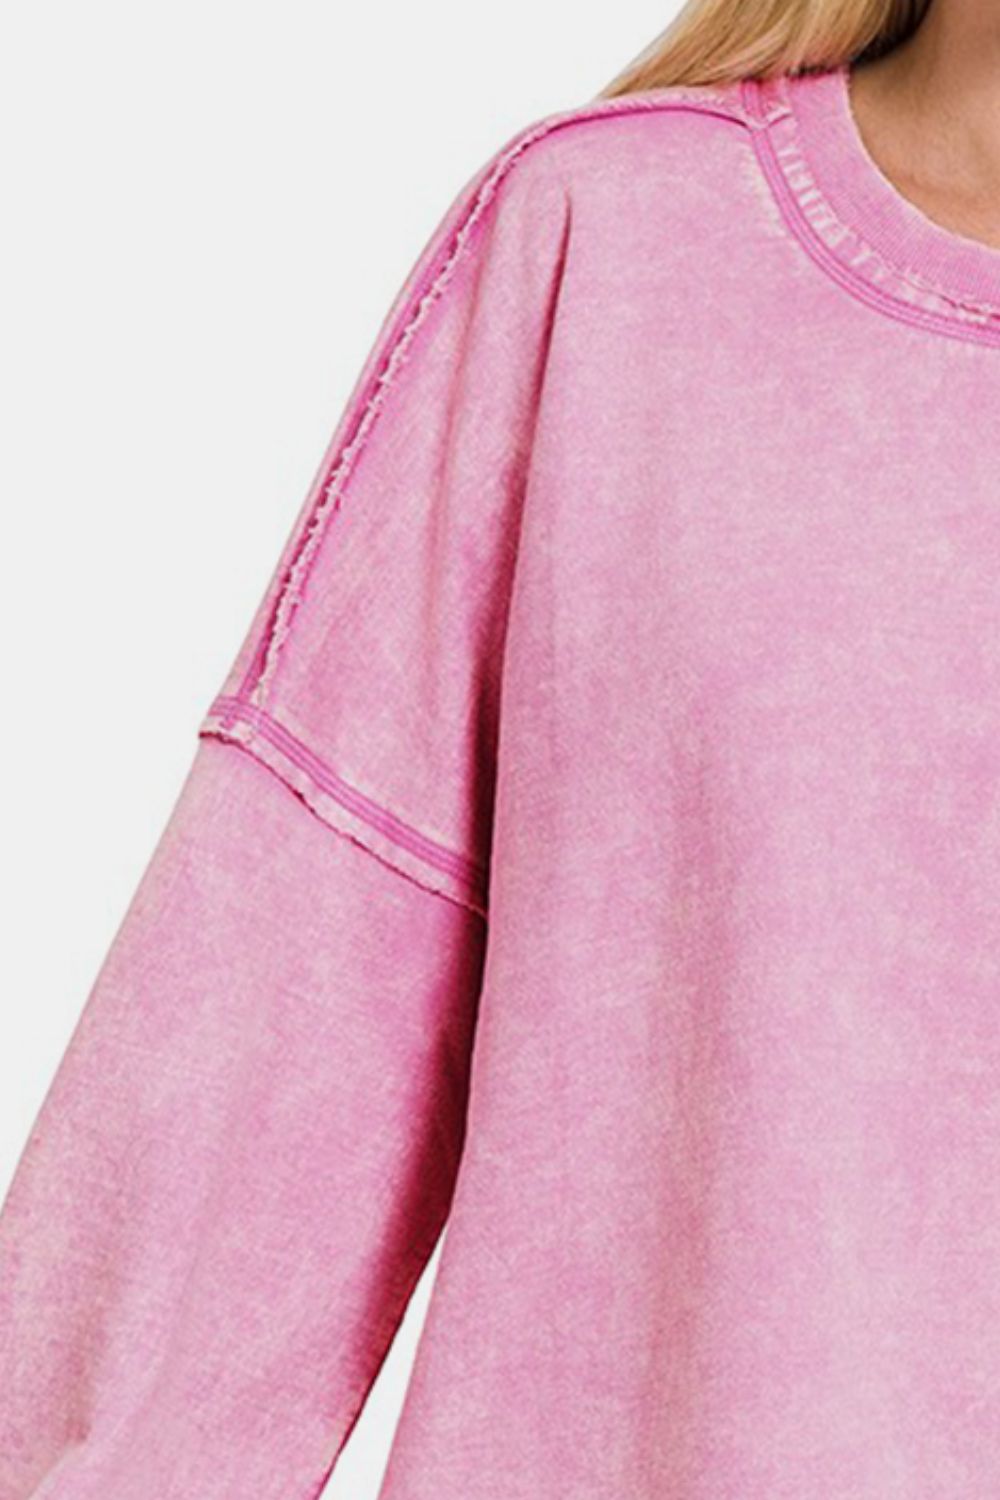 Fashion Sweater 100% Cotton Round Neck Dropped Shoulder Exposed Seam Sweatshirt Luxury Women's Fashion KESLEY